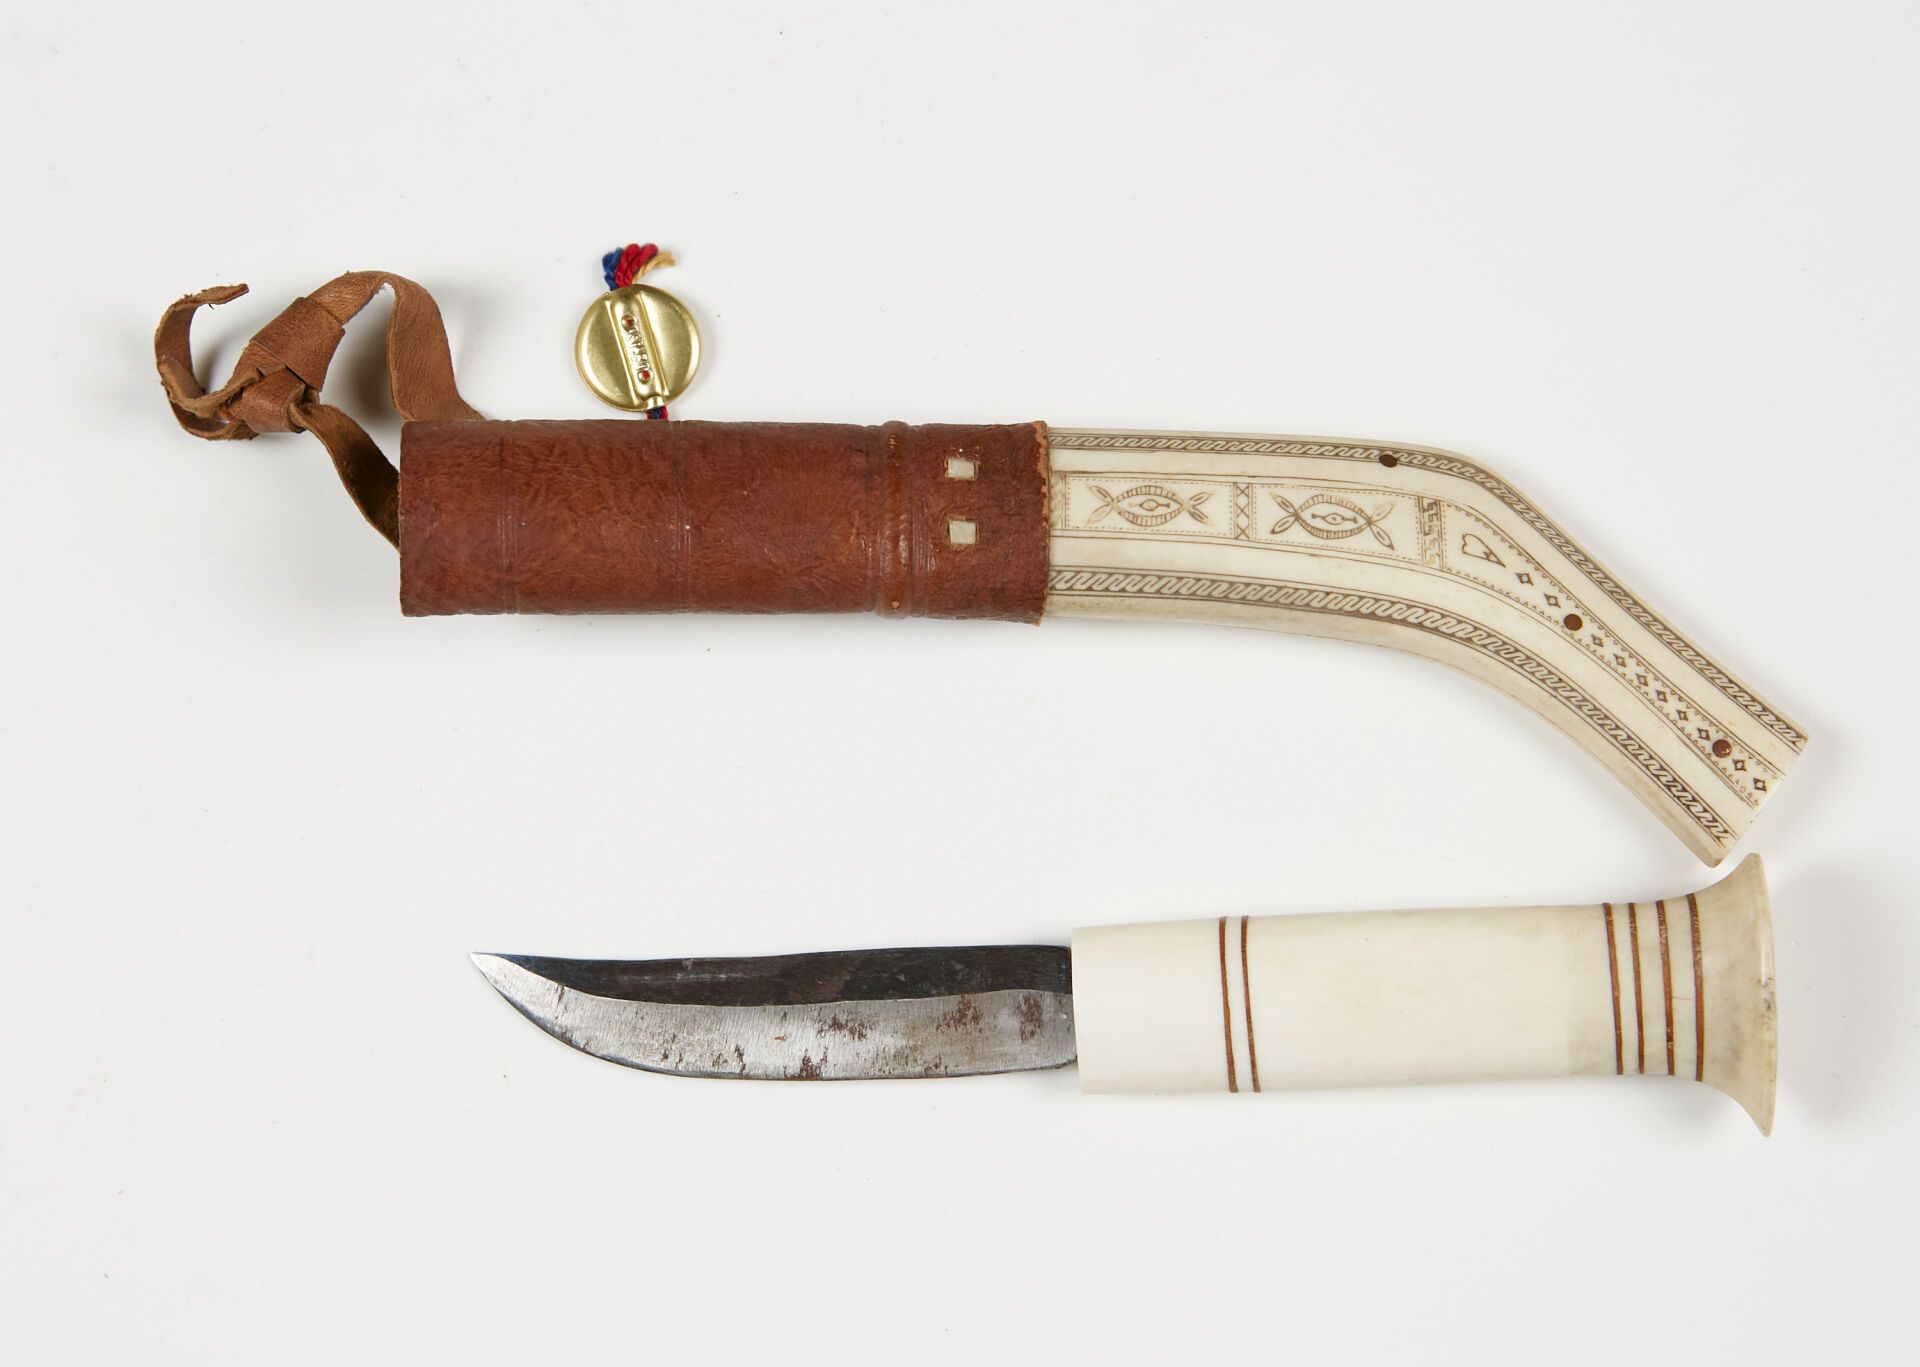 Null Finnish knife.
Bone handle and scabbard. 
B.E. Modern manufacture.